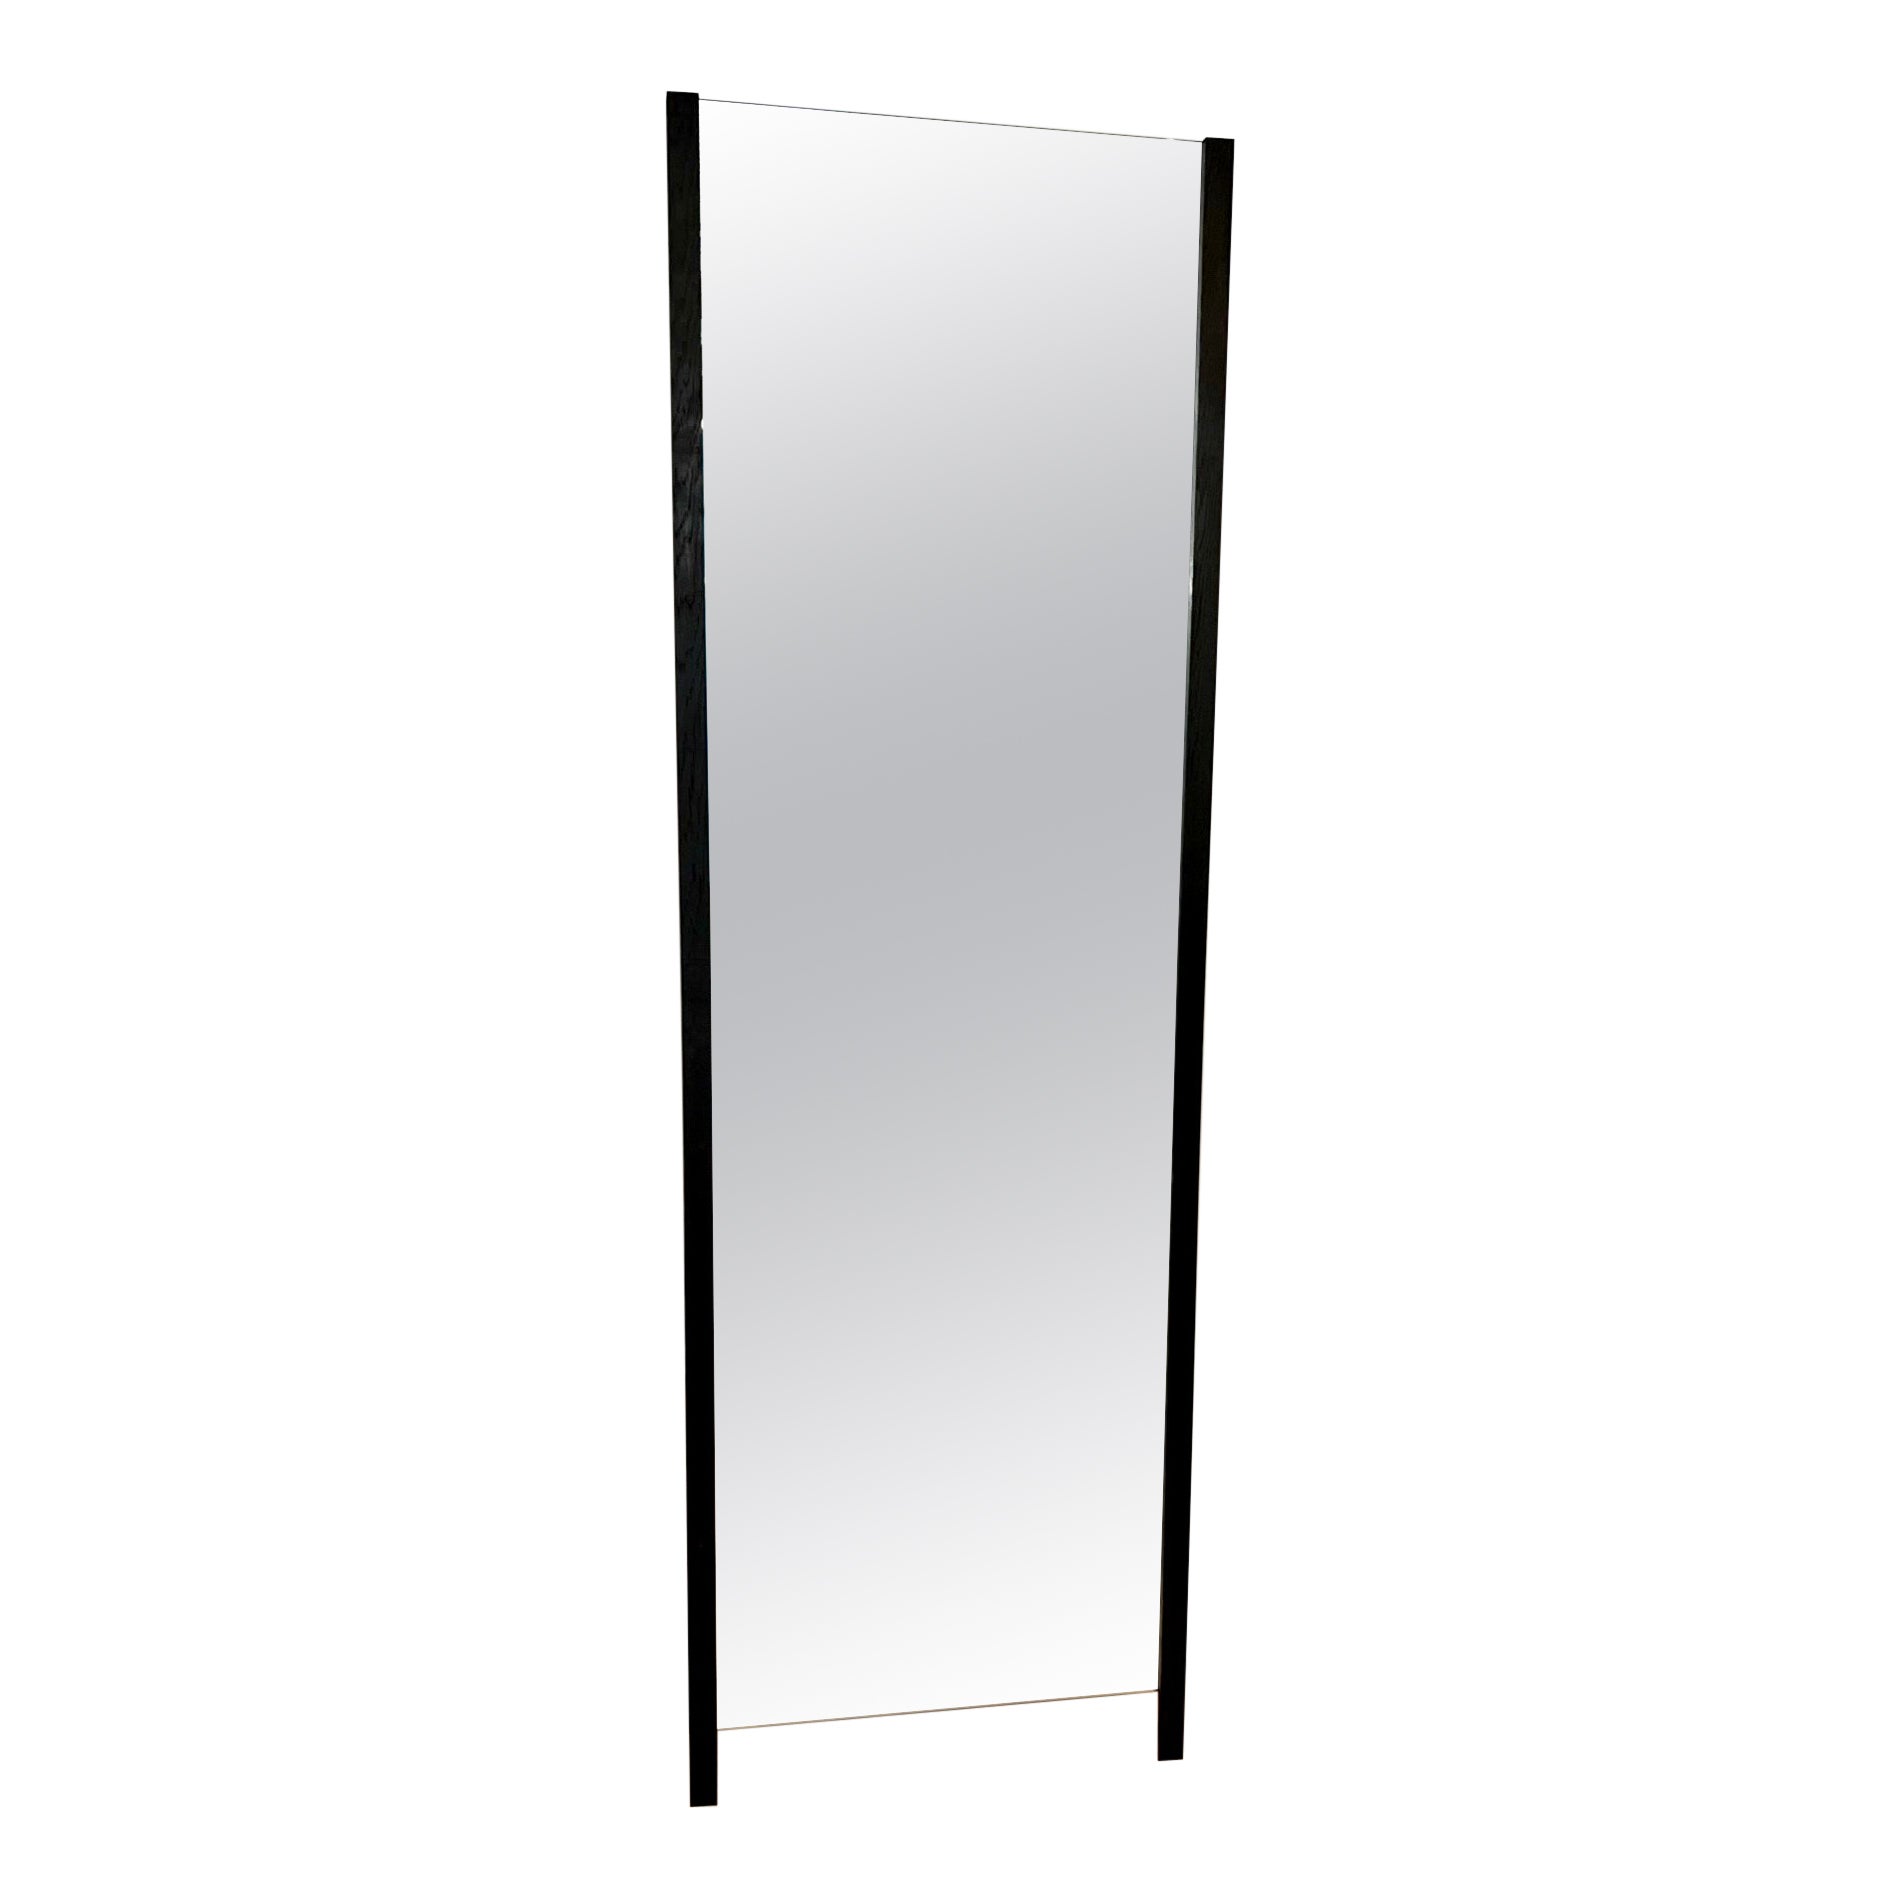 Miroir Crura grand format minimaliste sur pied en vente